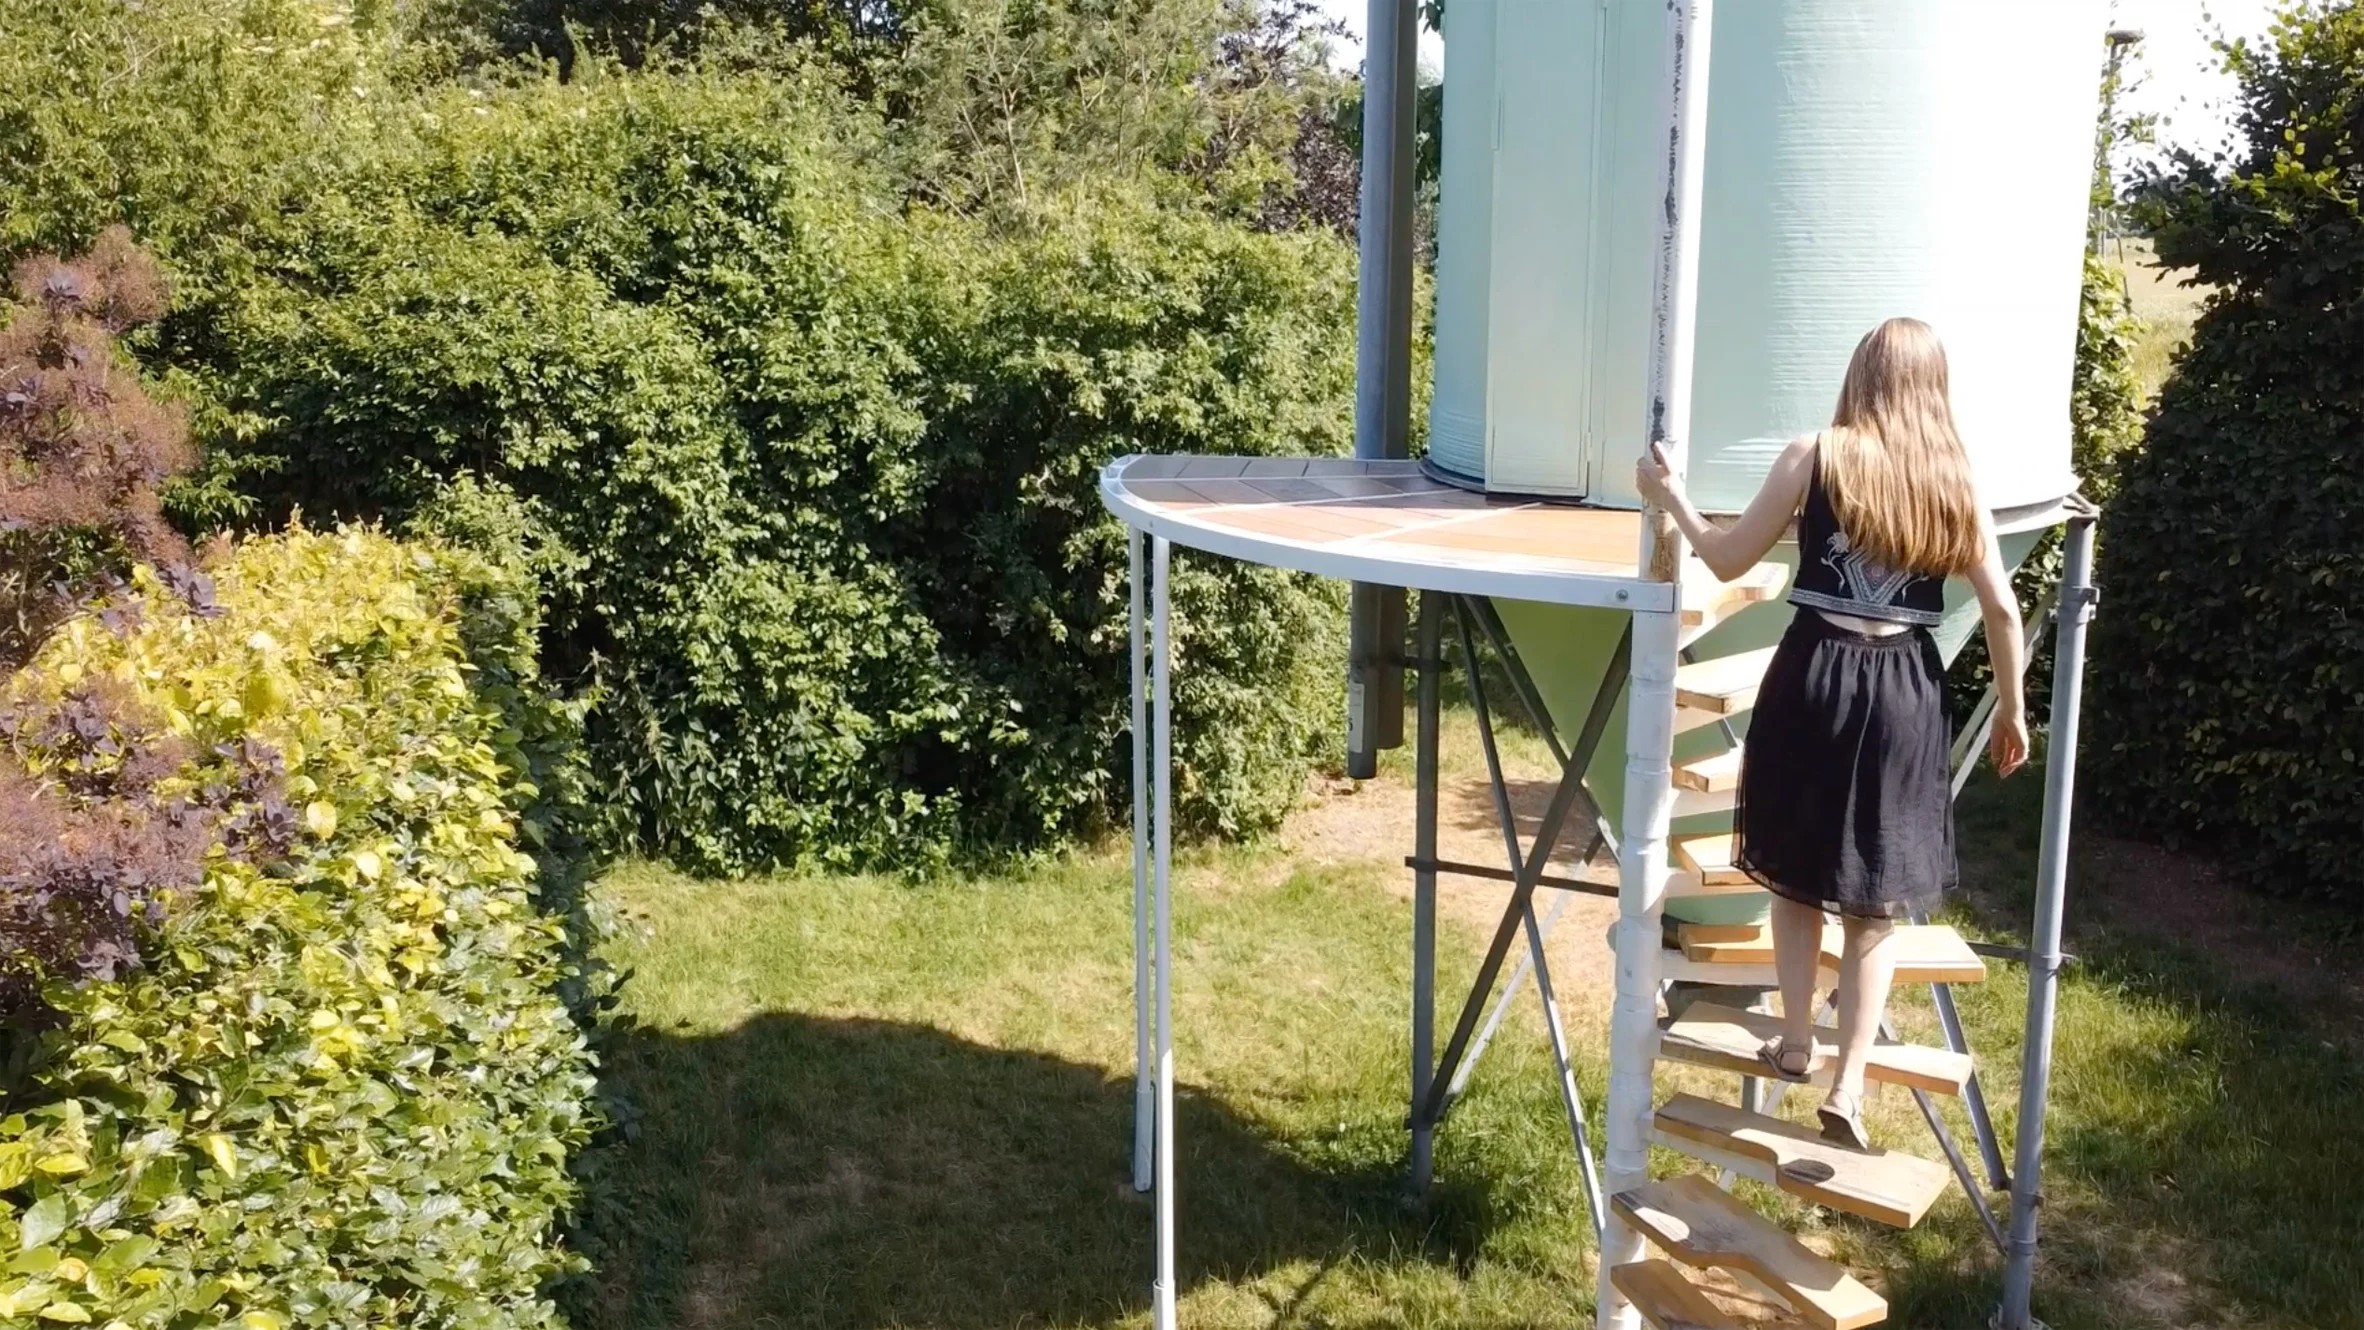 Stella van Beers converts grain silo into micro home